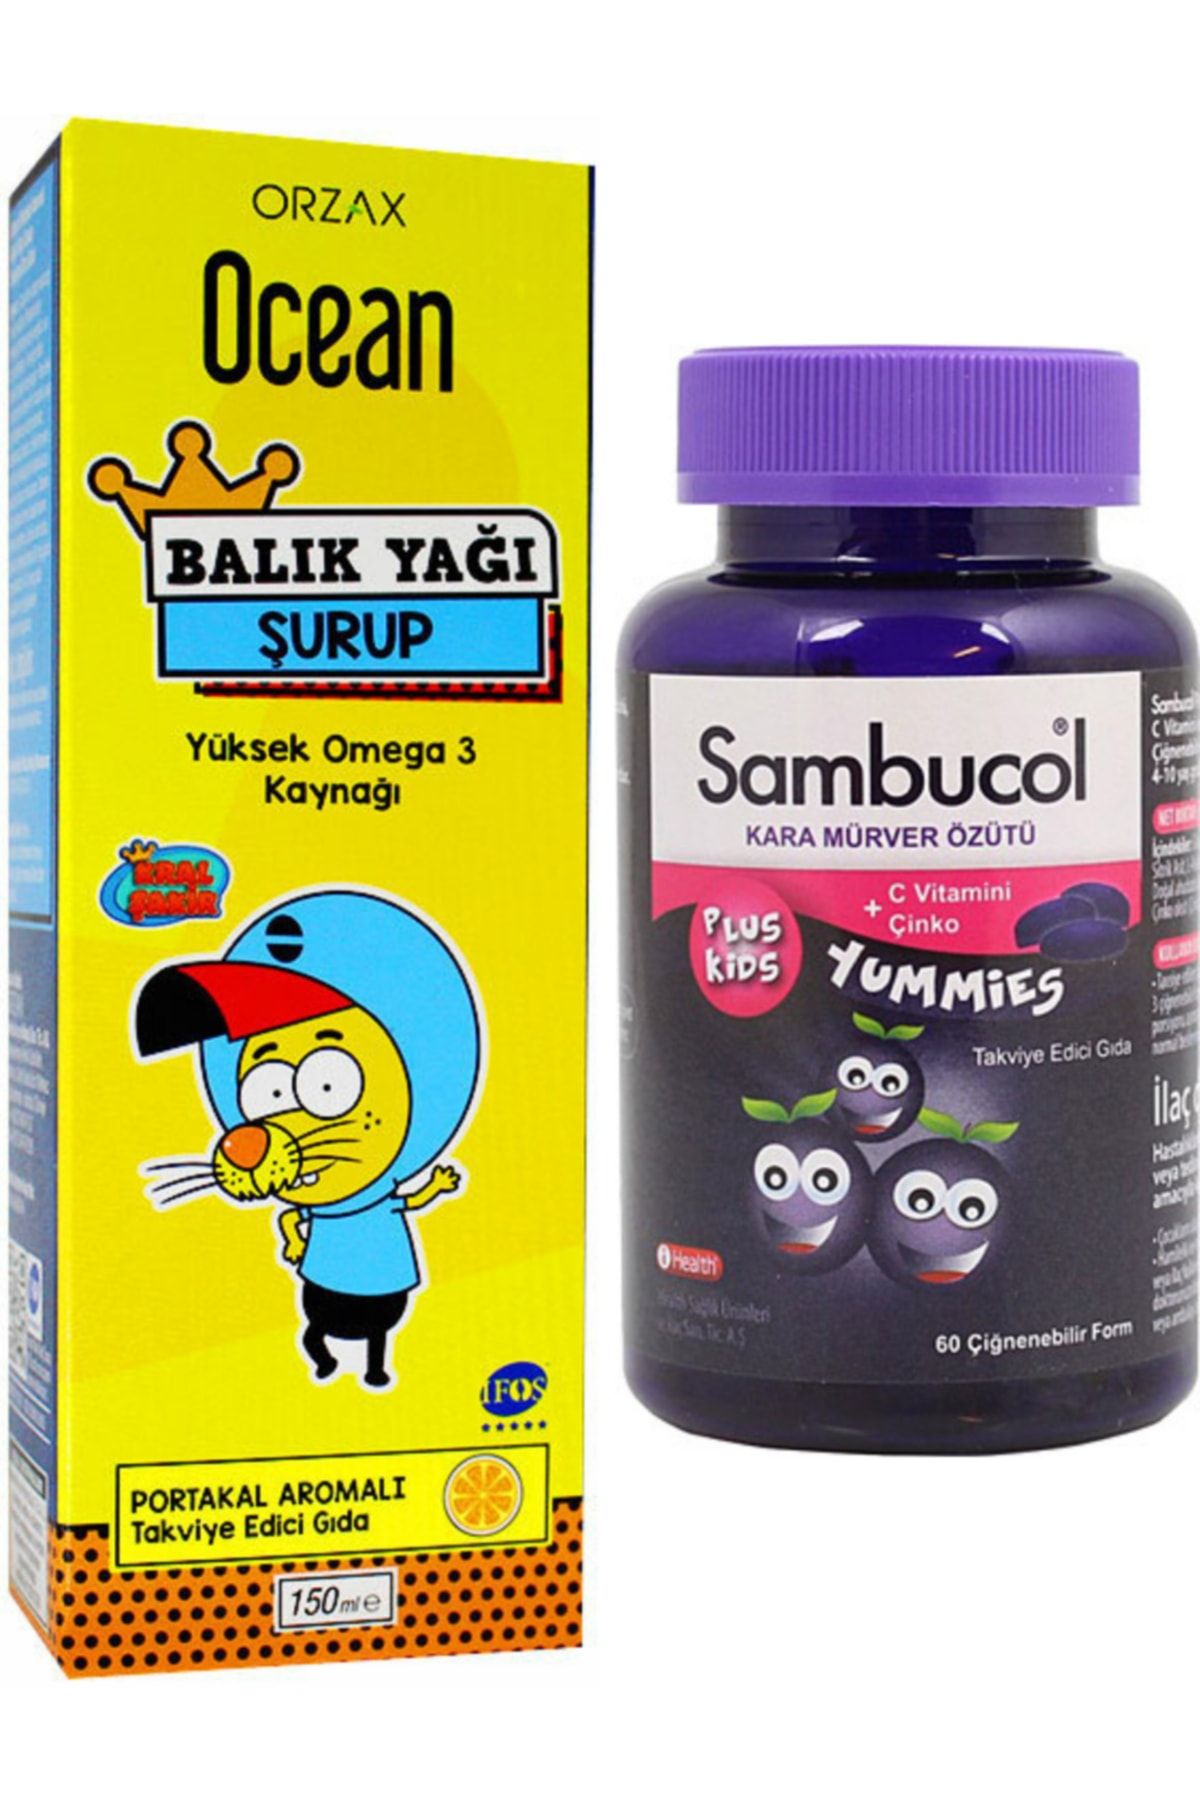 Ocean Balık Yağı Şurup Portakal Aromalı 150 ml + Sambucol Plus Kids Yummies 60 Çiğnenebilir Form